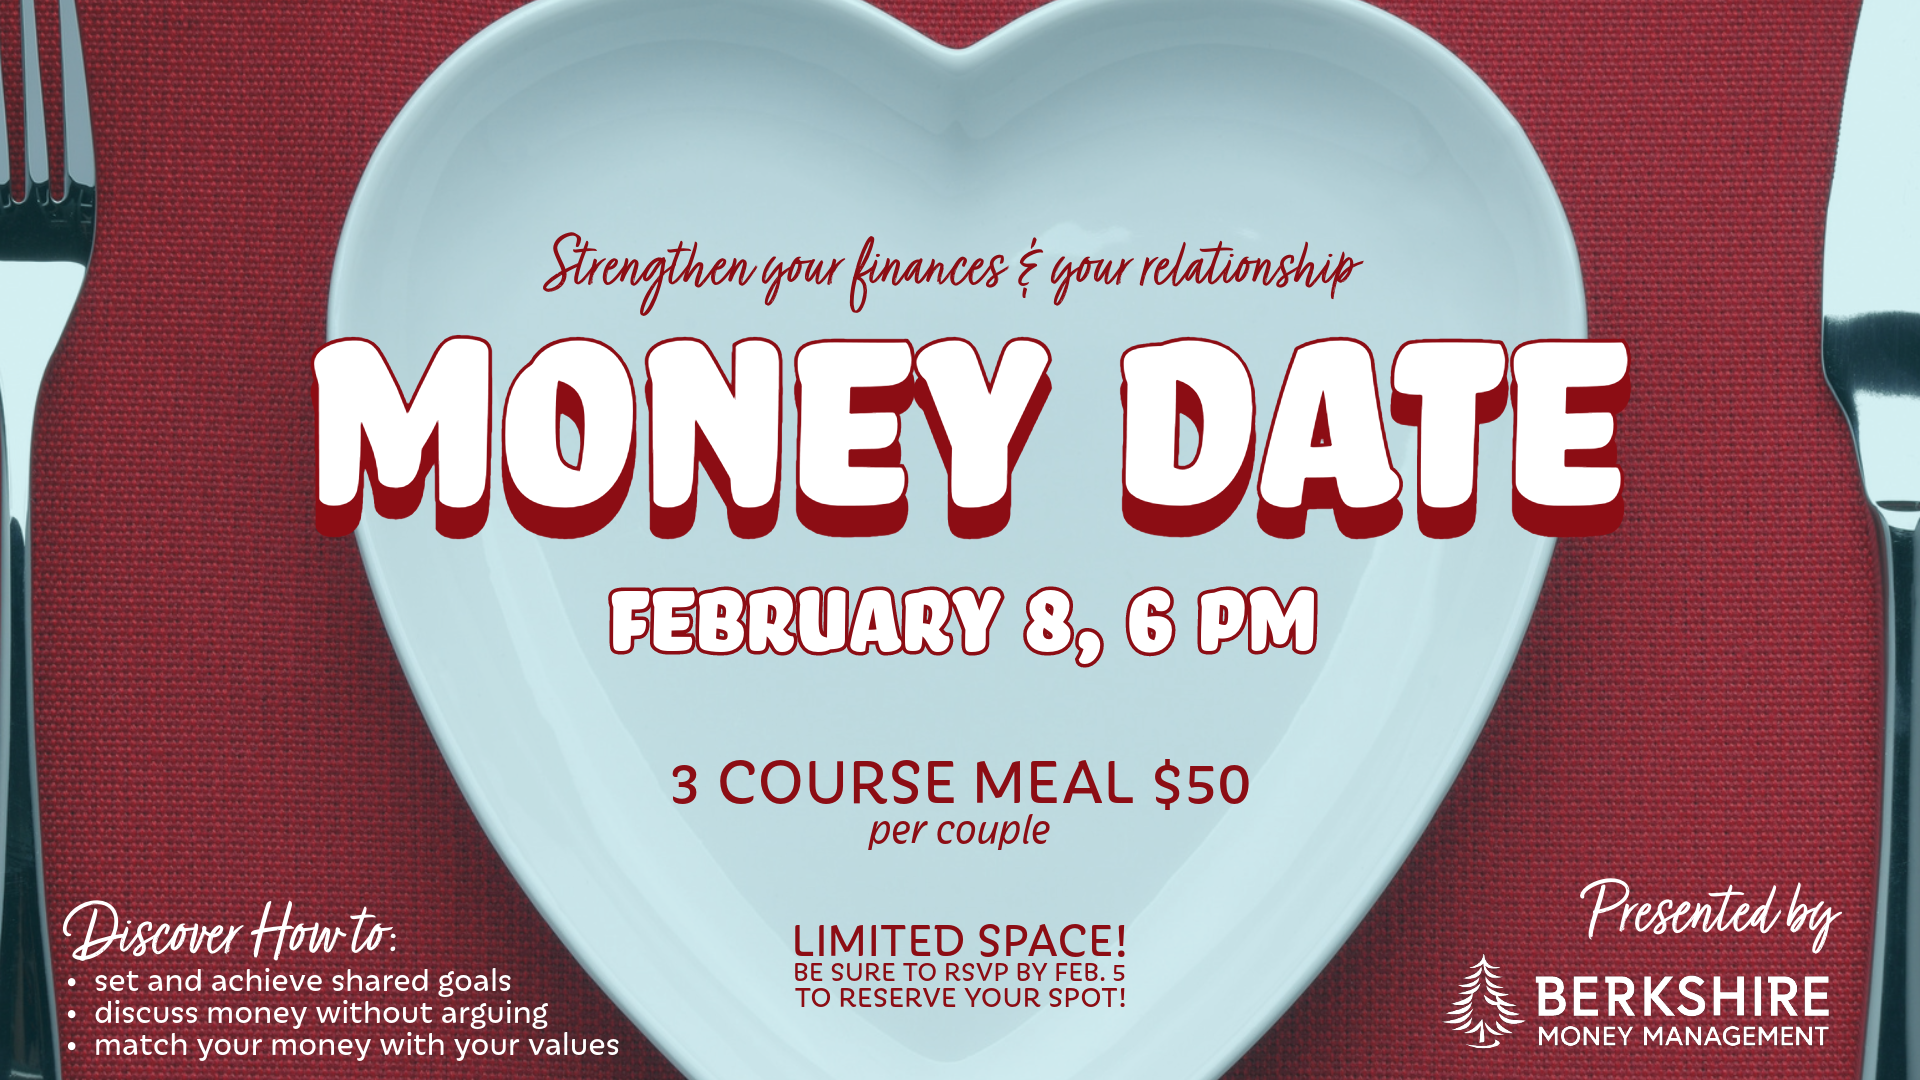 Money Date. February 8, 6 pm